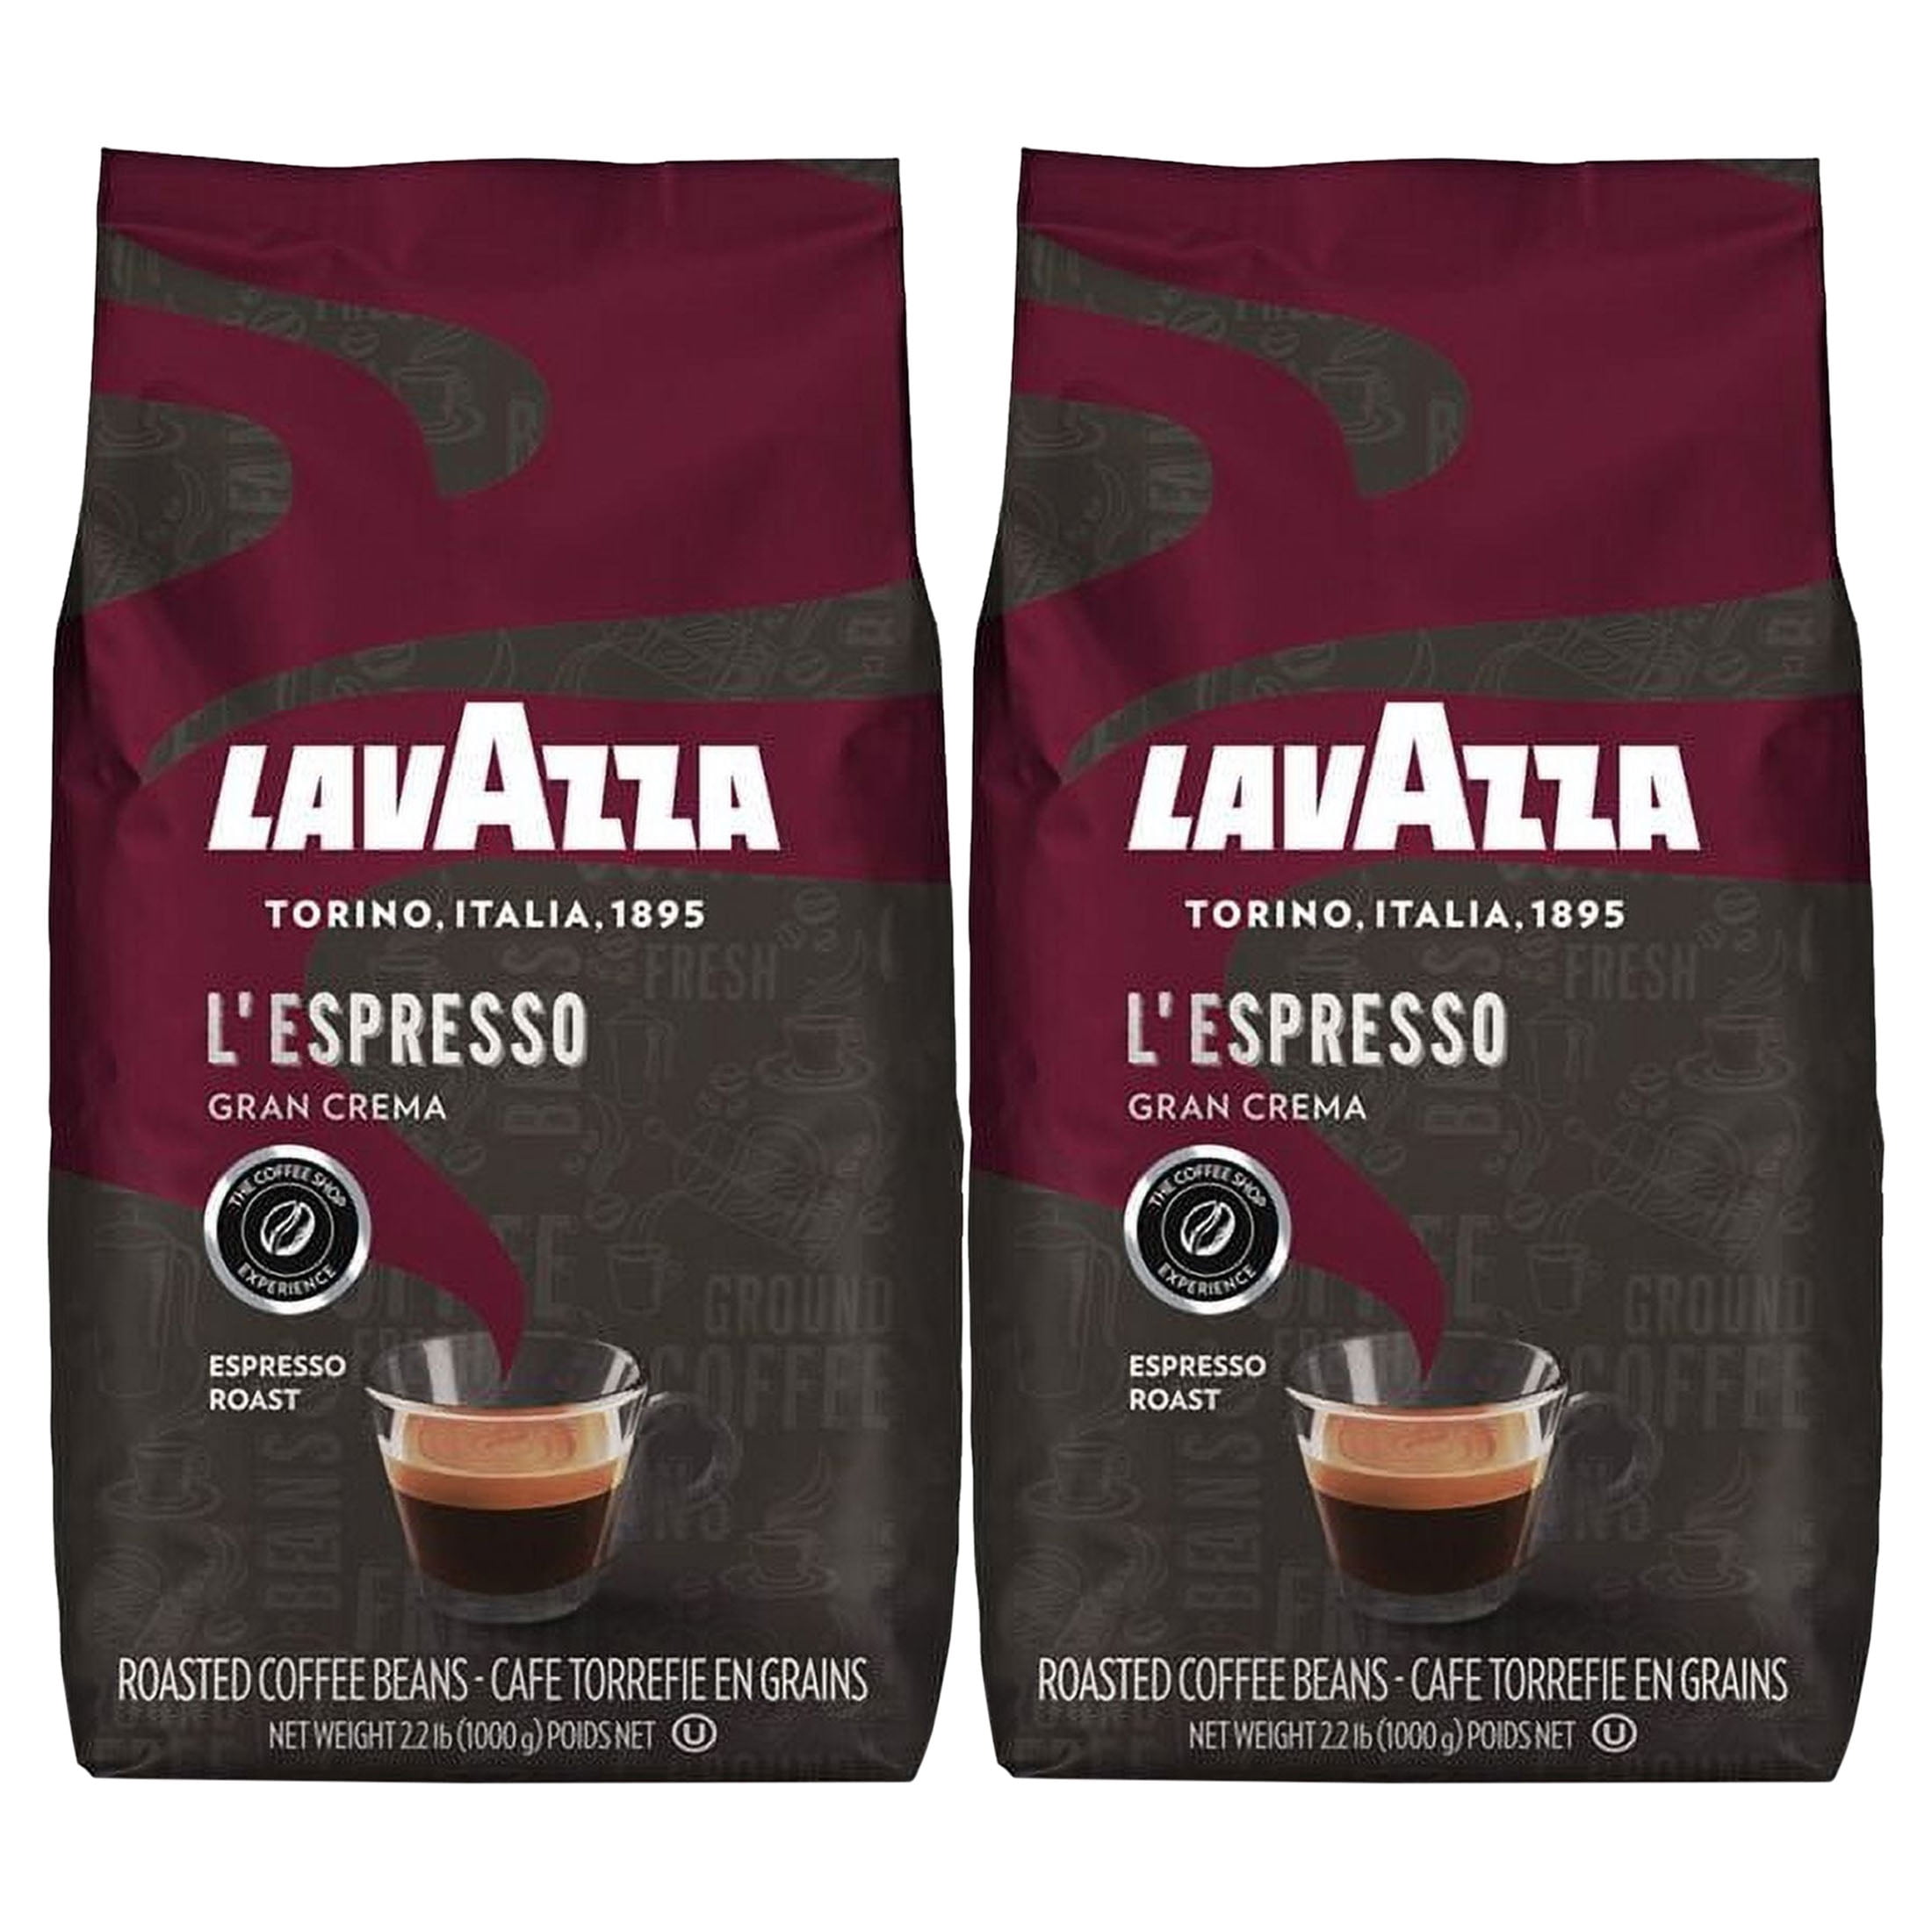 6-Pack 2.2-Lbs Lavazza Super Crema Whole Bean Coffee Blend (Super